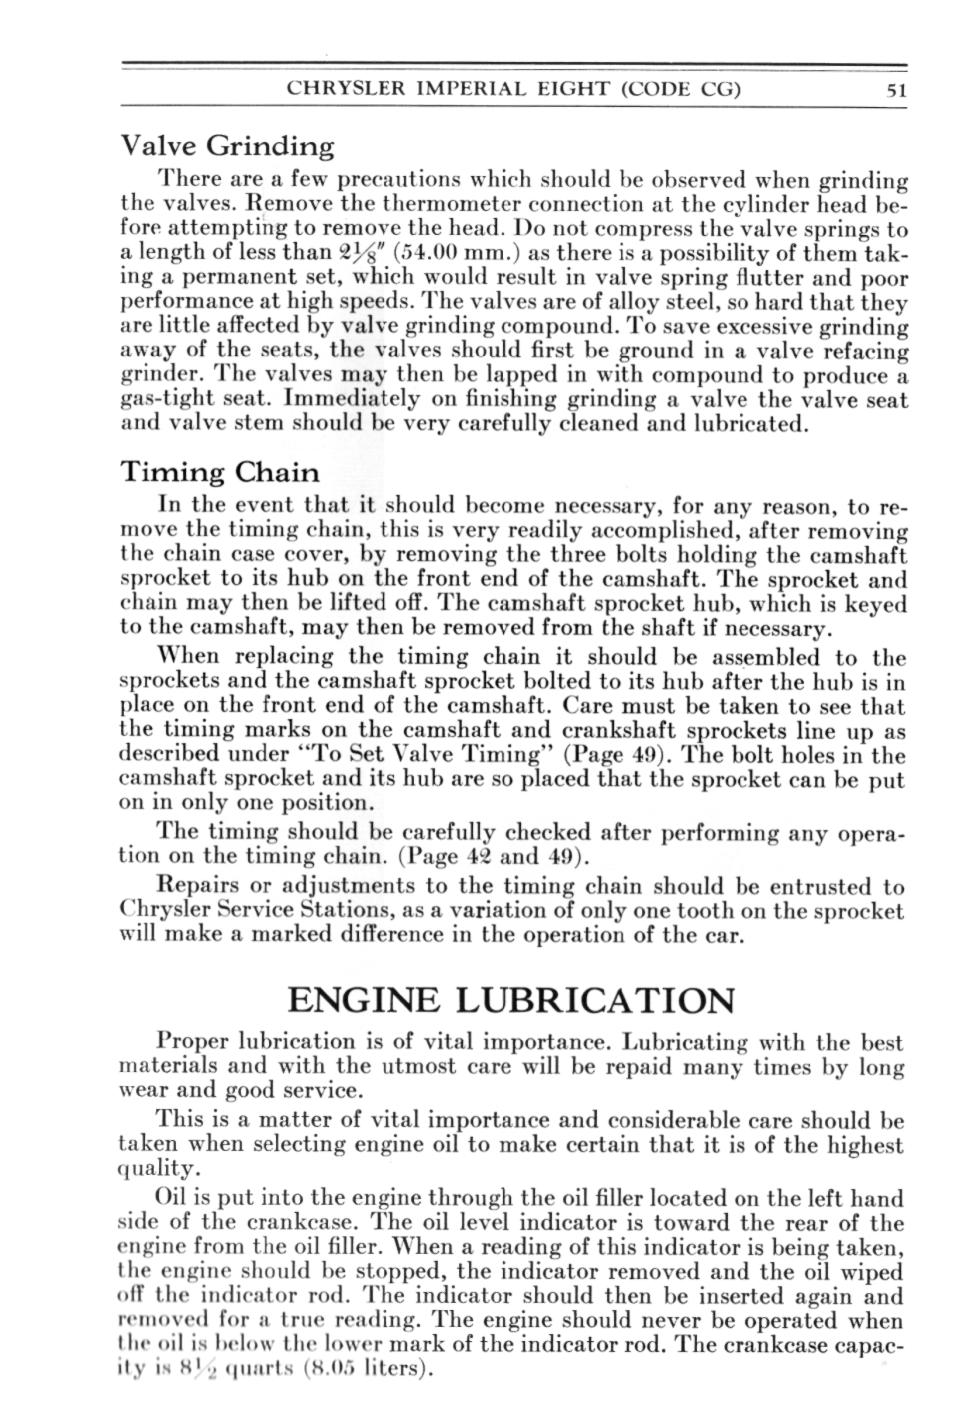 1931 Chrysler Imperial Manual-51